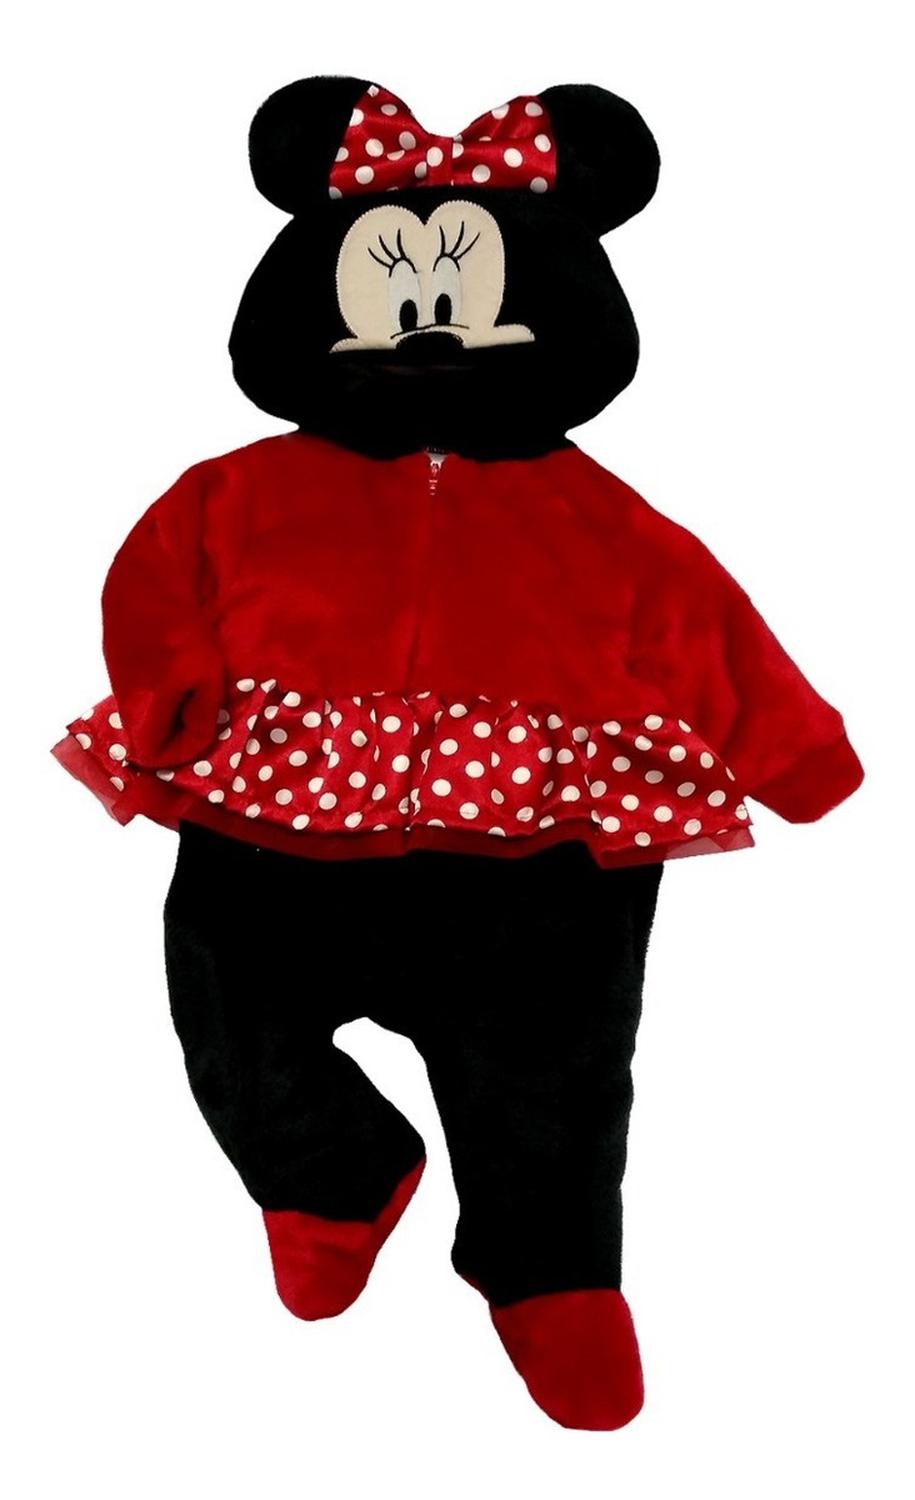 Kit 3 Mamelucos Disney para Bebé con Gorro Bordado Daisy, Minnie, Minnie Cara.